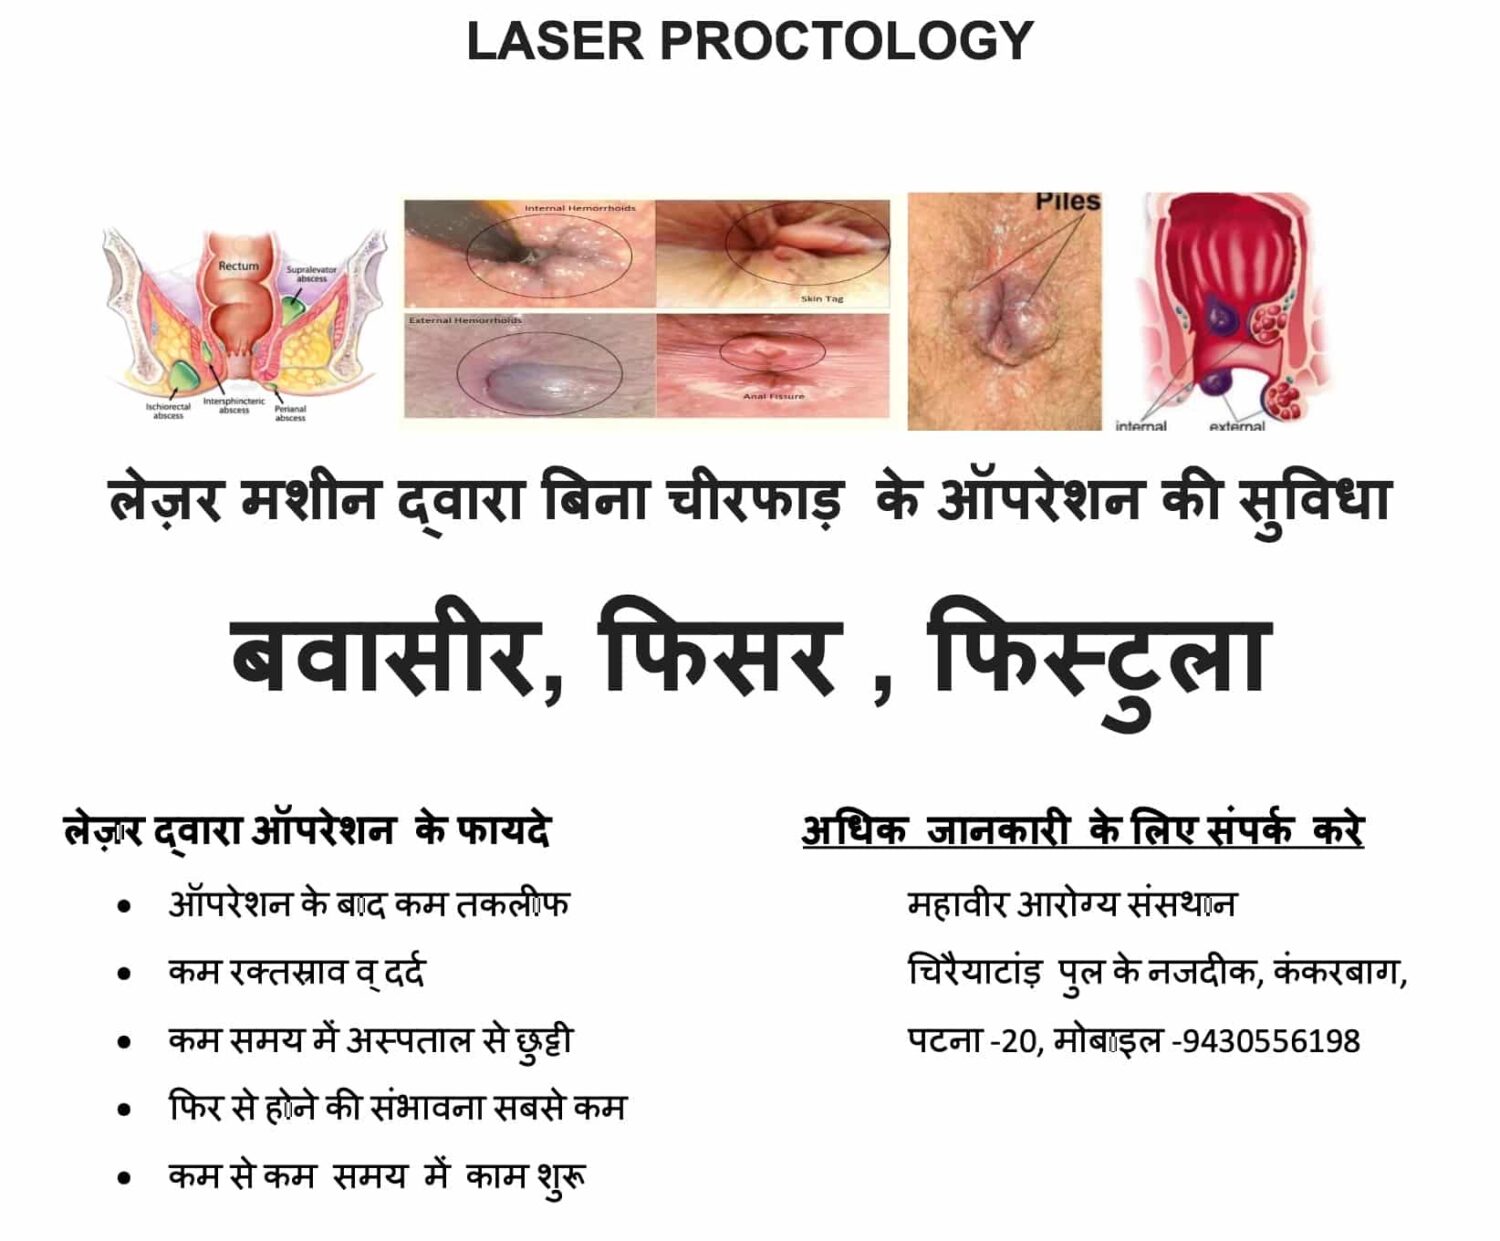 Laser proctology